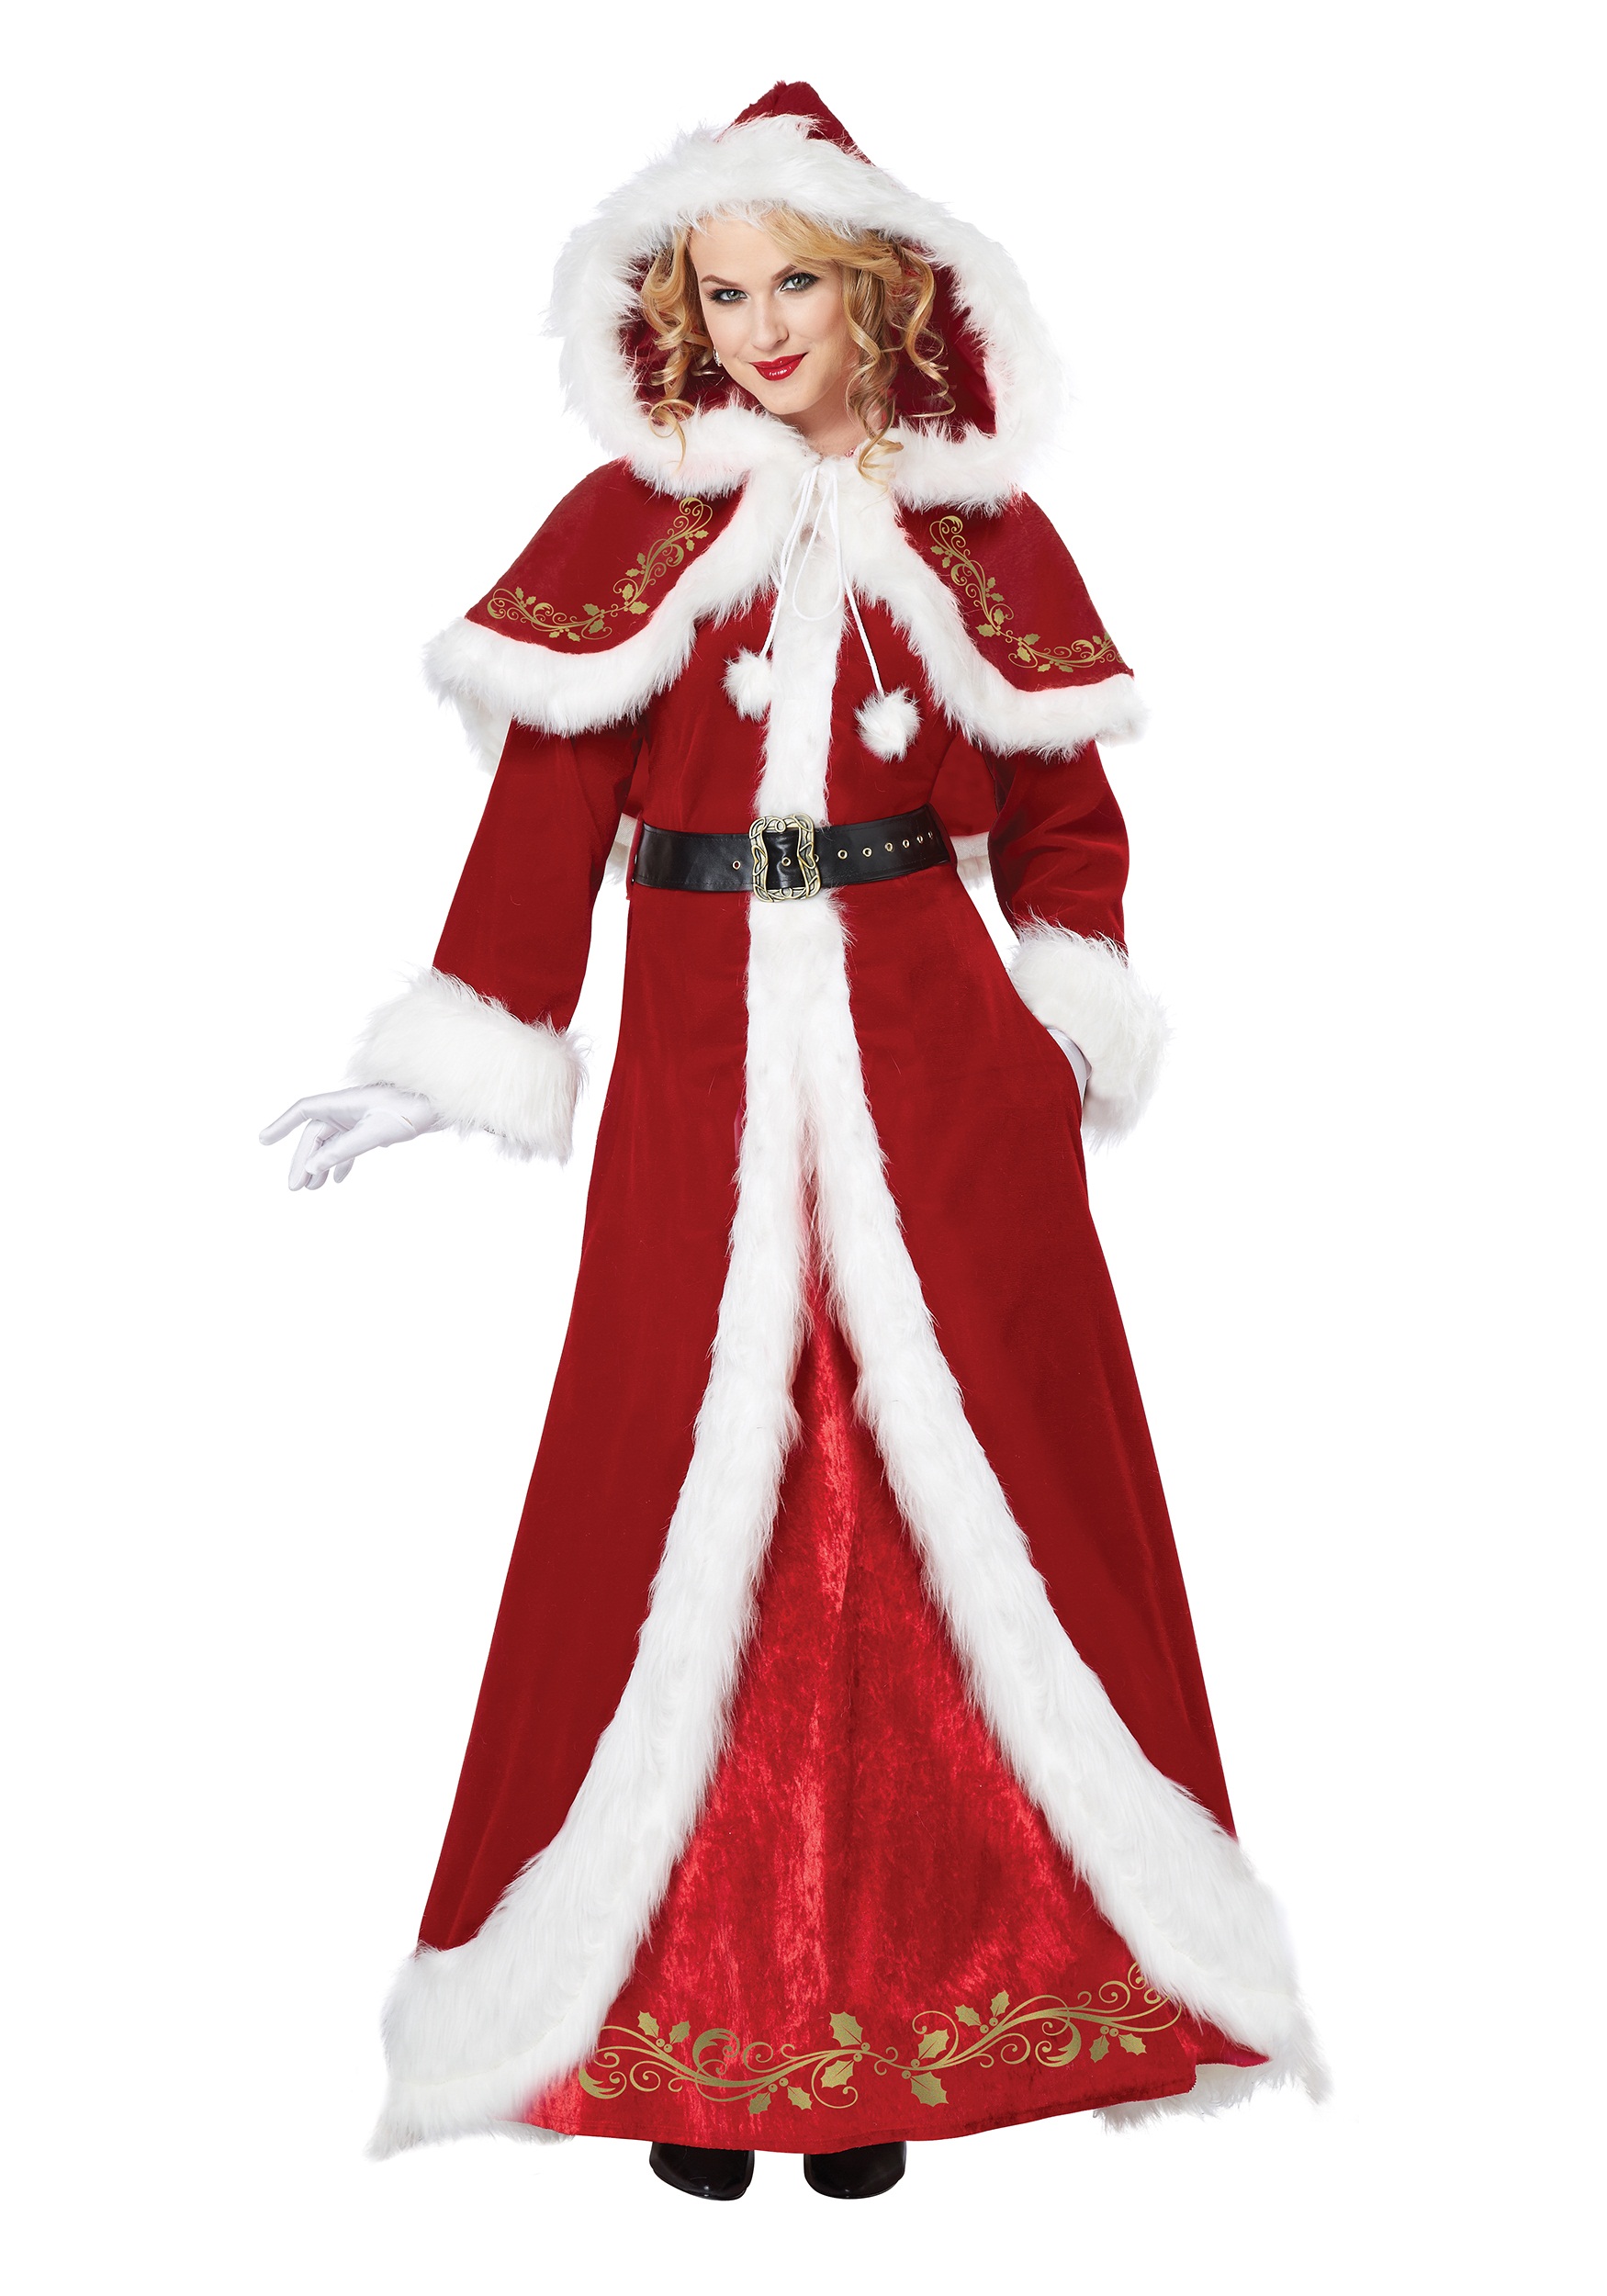 XXXL NEW MRS MS Santa CLAUS Costume Dress Christmas 3 Sizes Standard Plus